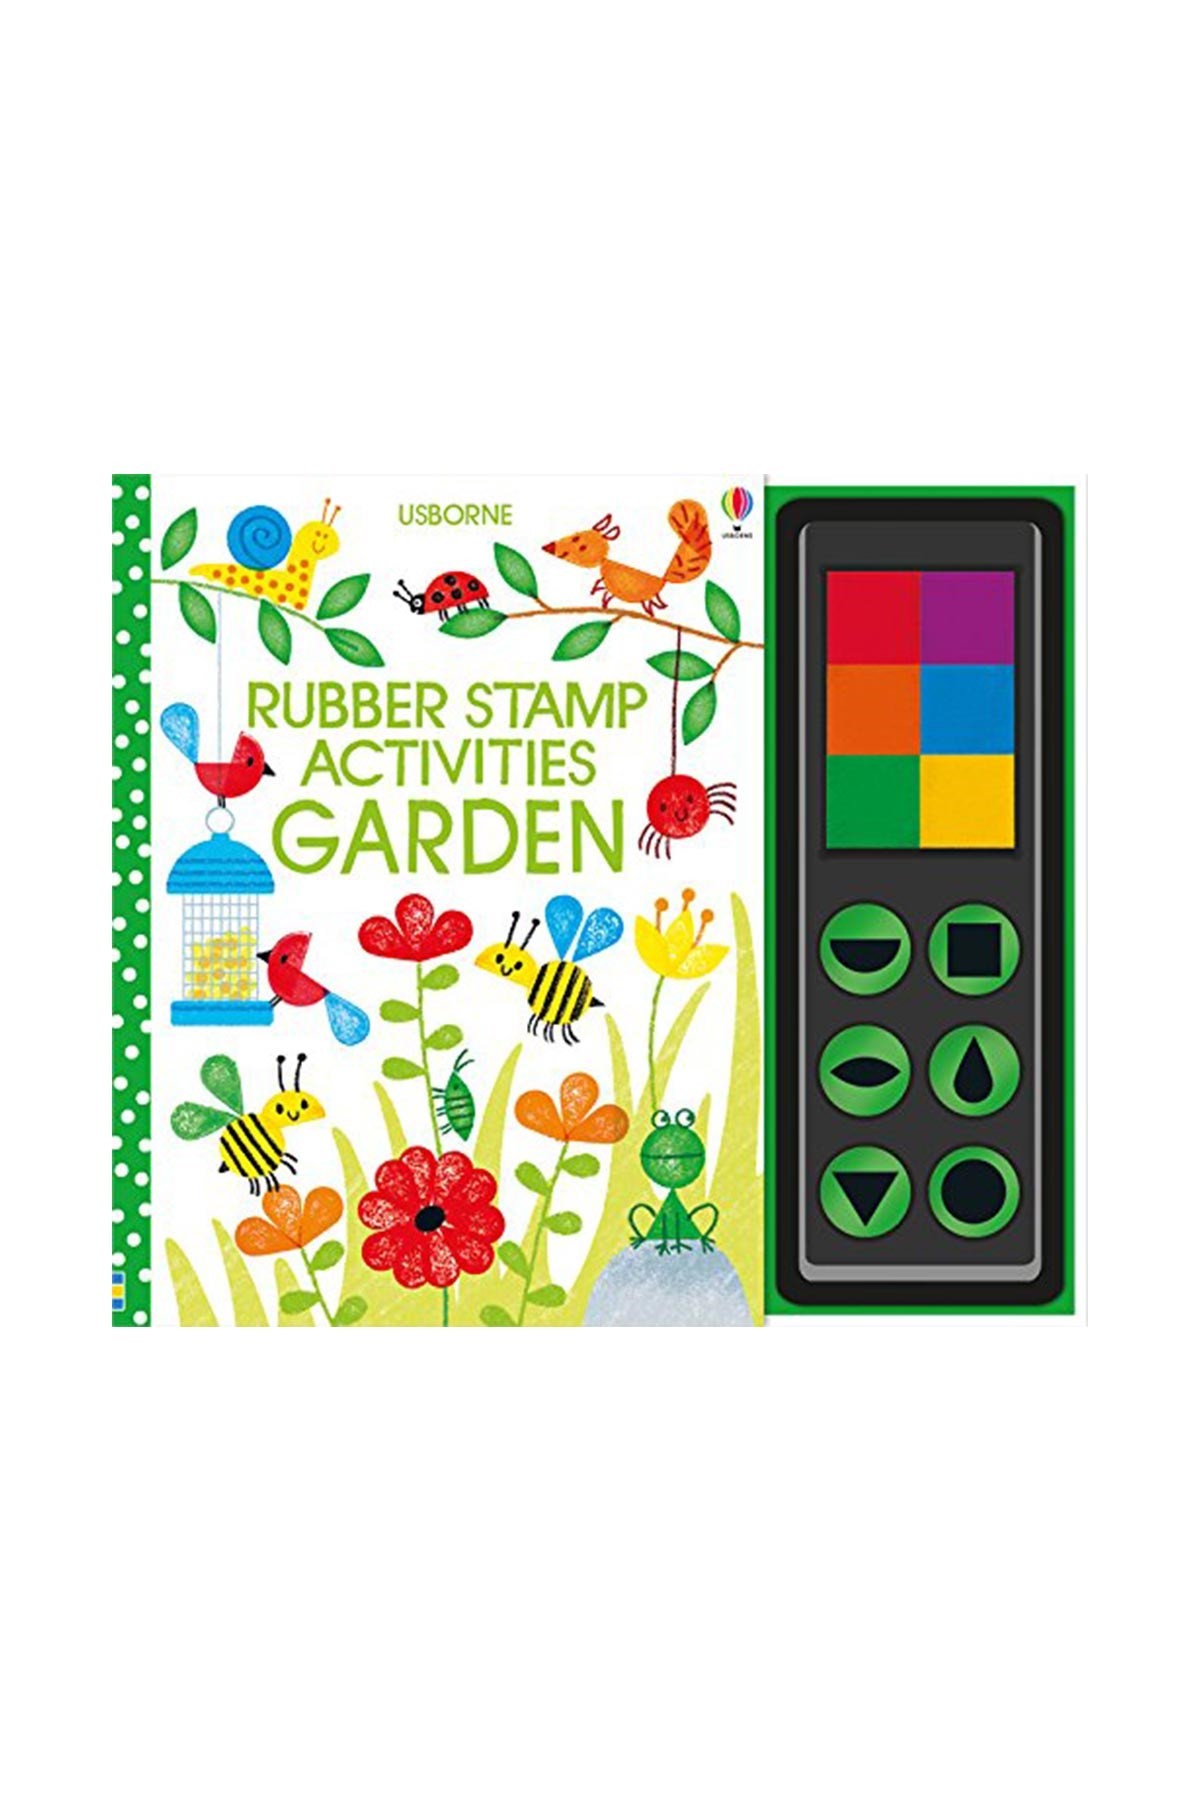 The Usborne Rubber Stamp Activitiesi Garden